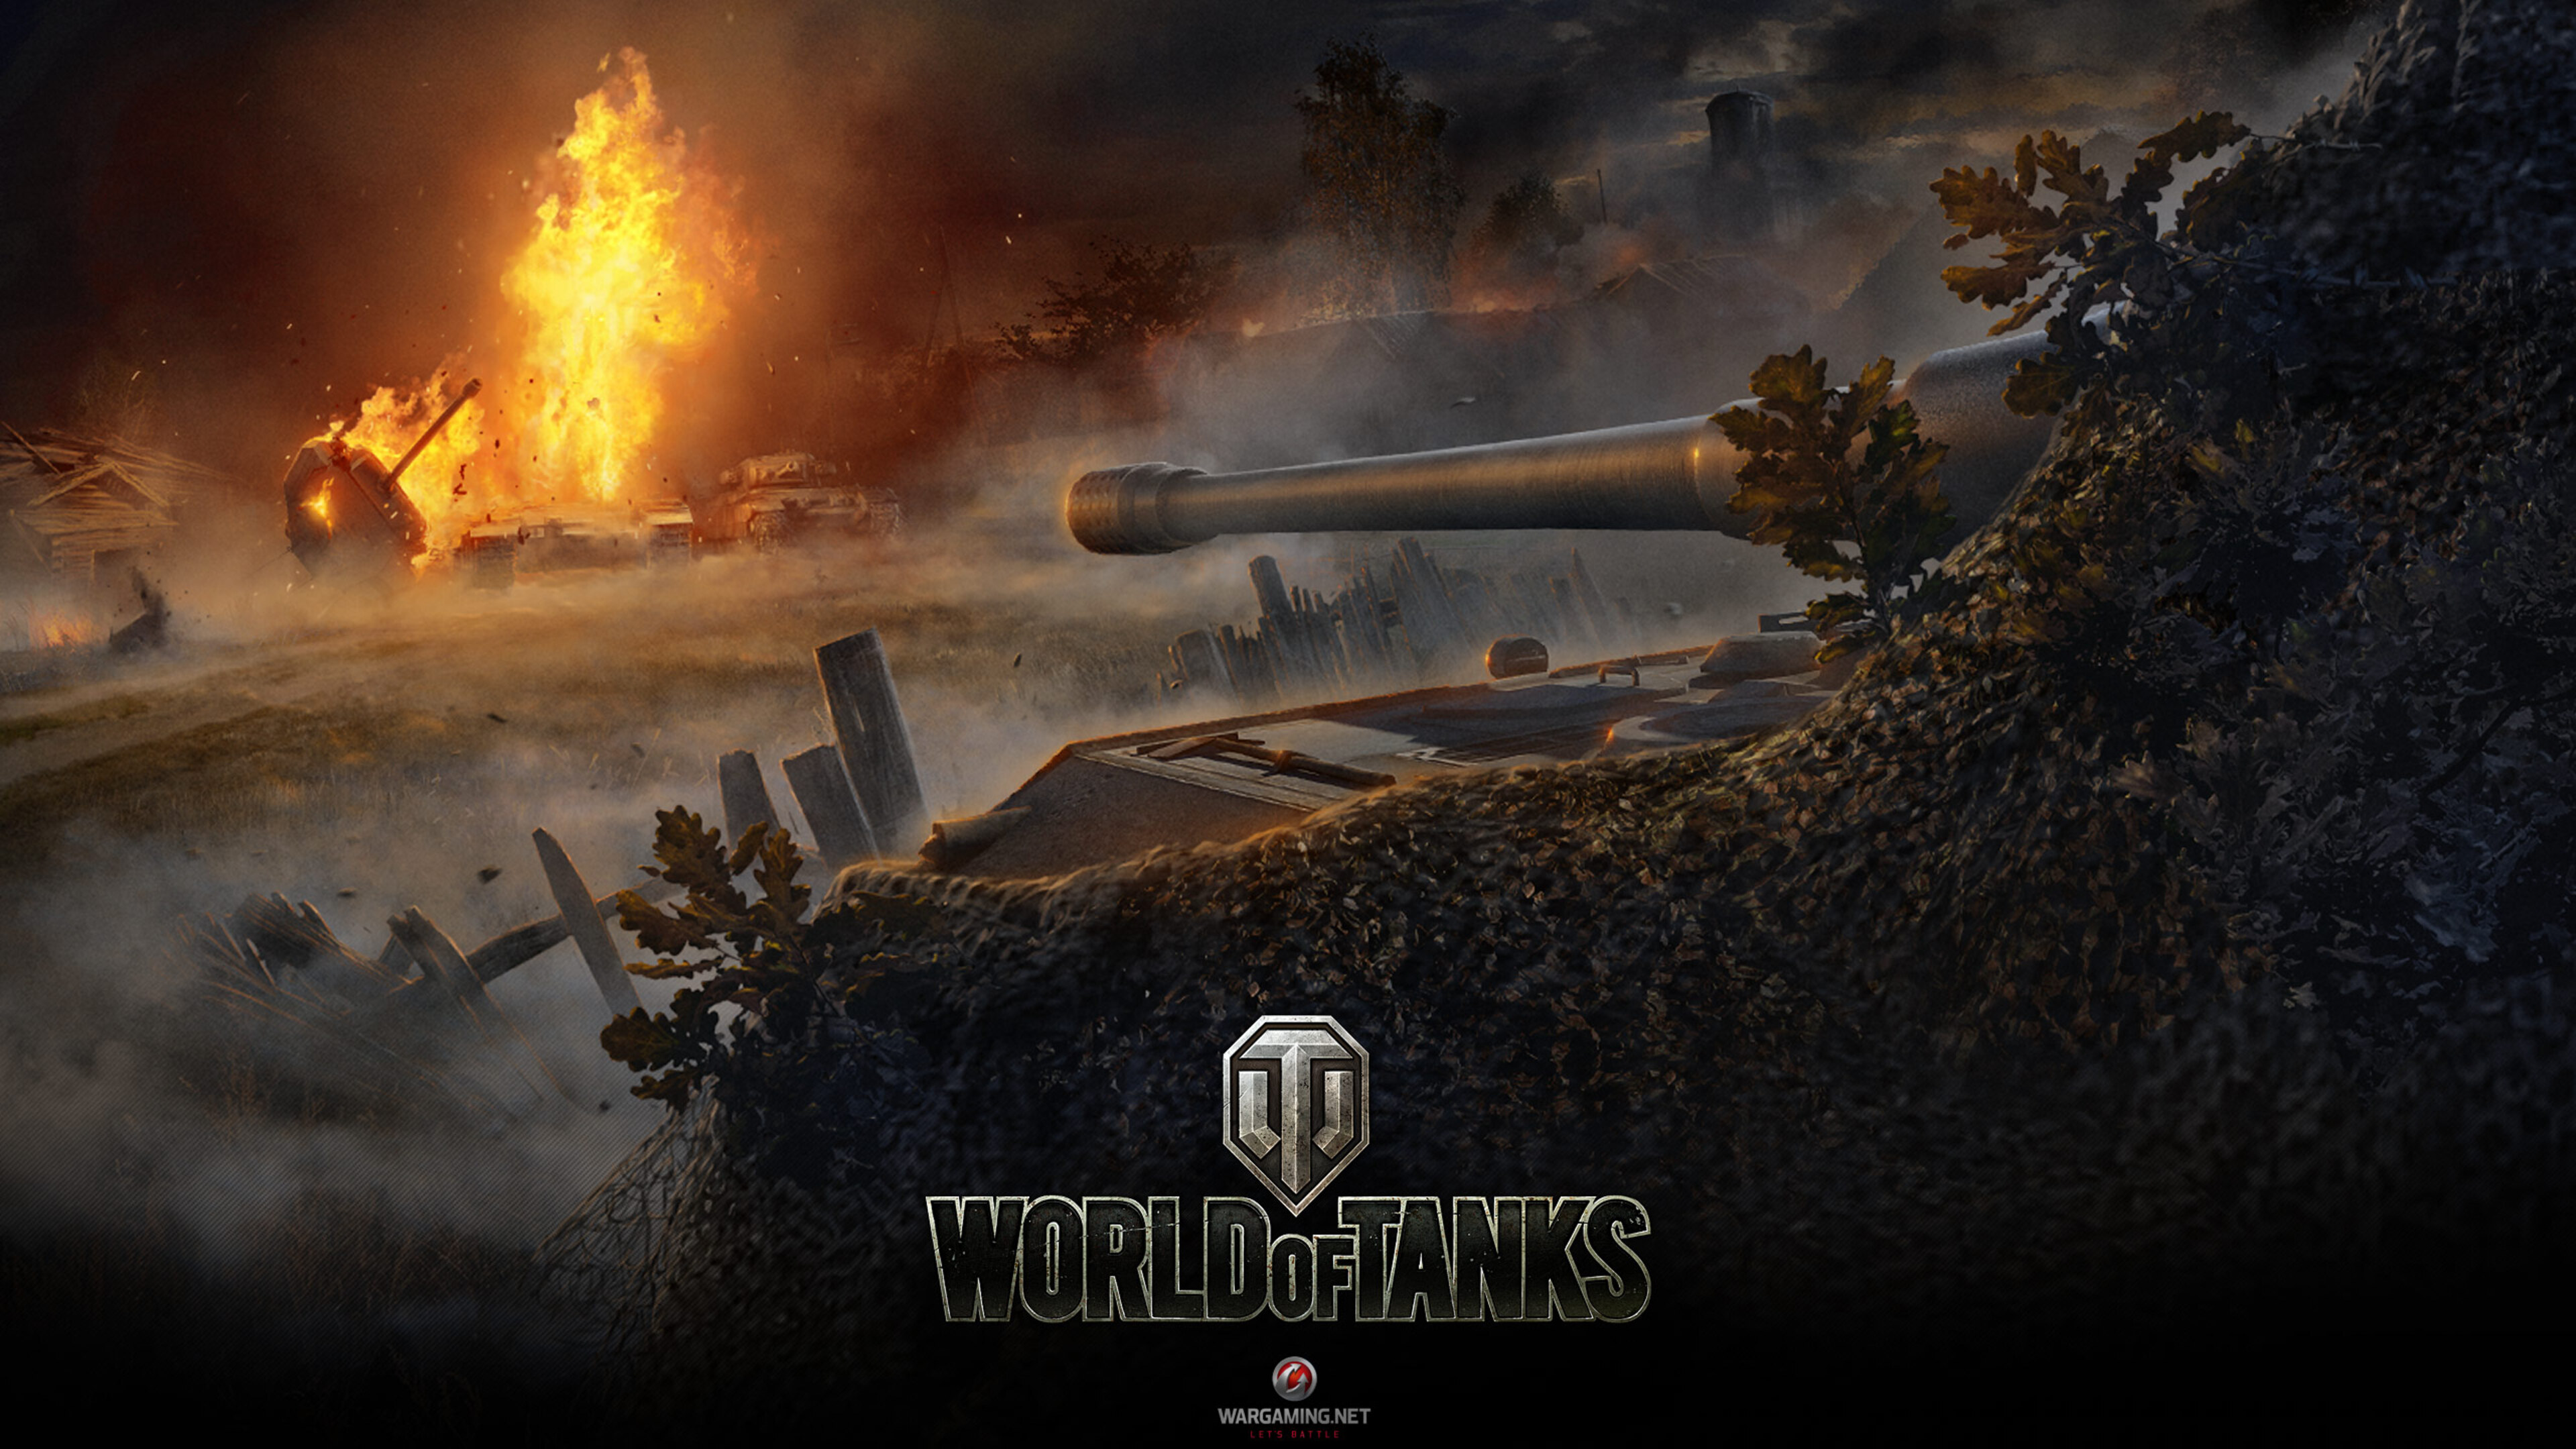 Wot экран. Танк World of Tanks. Загрузочный экран ворлд оф танк. Постер ворлд оф танк.